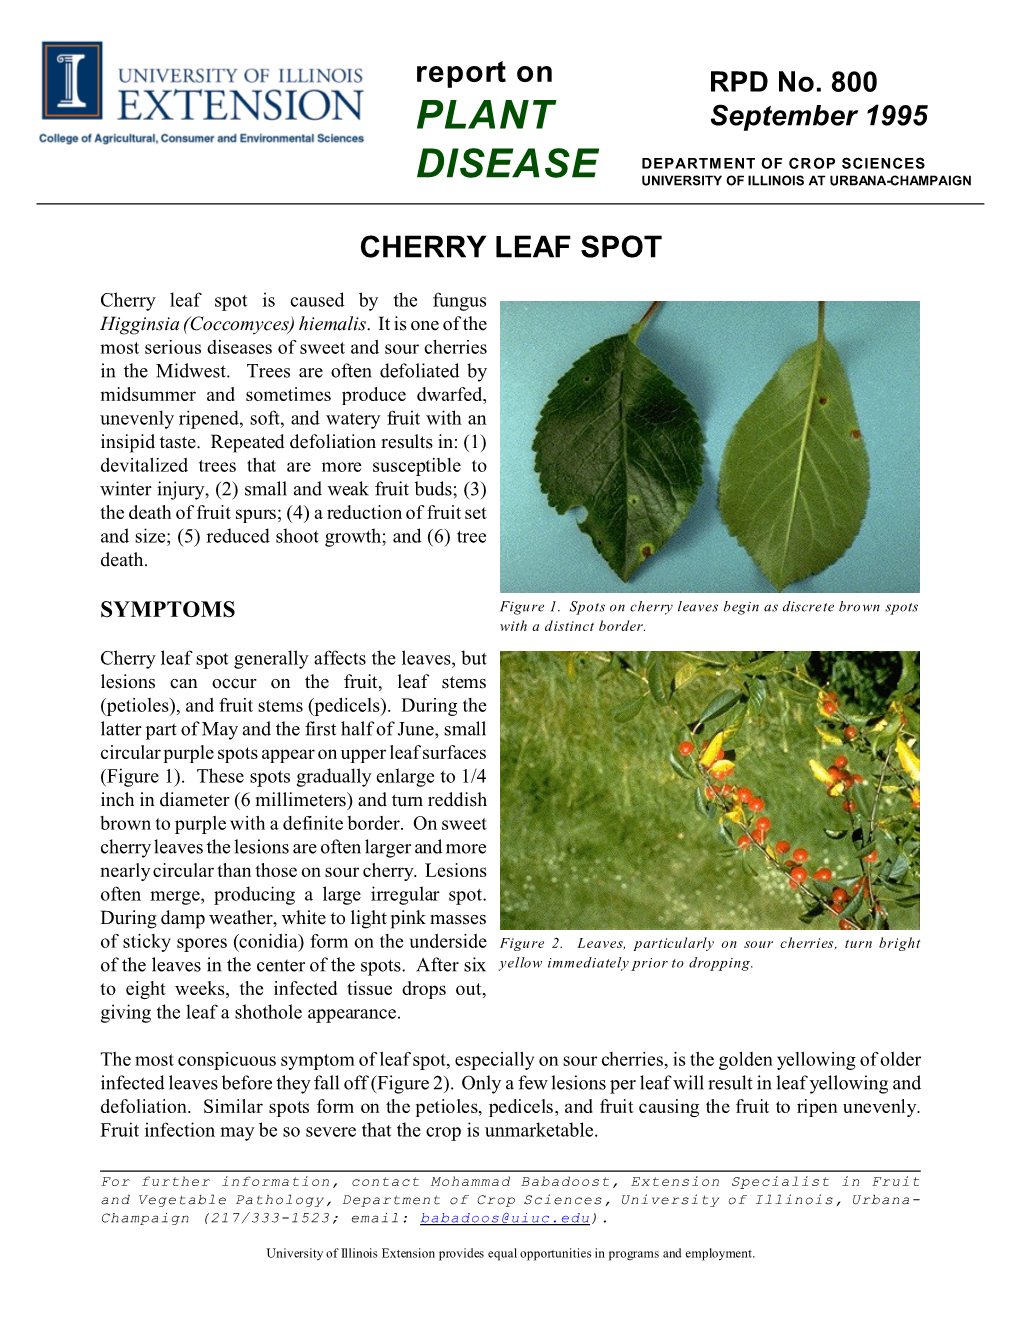 Cherry Leaf Spot, RPD No